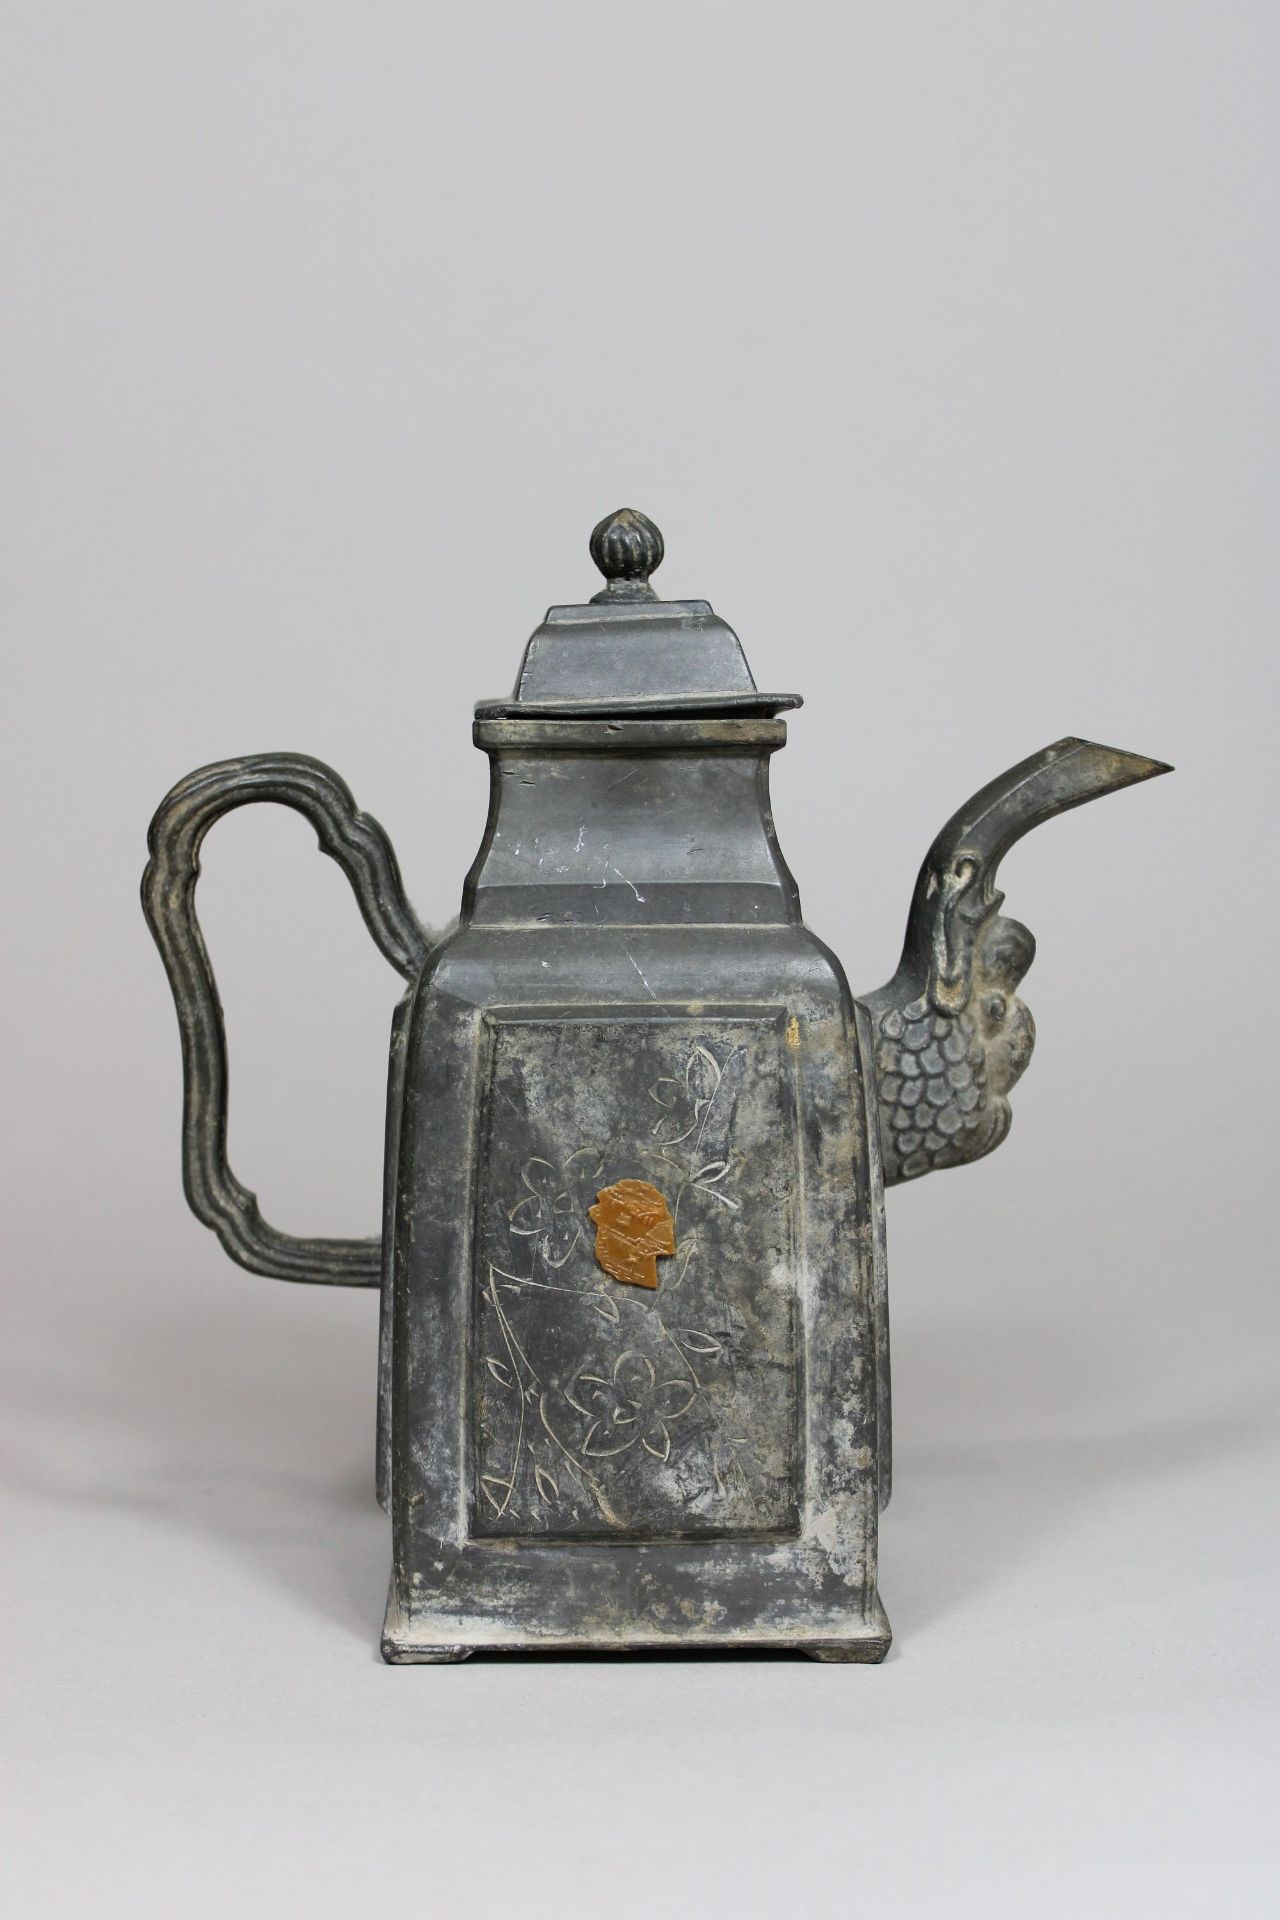 Quadratische Zinn-Teekanne, China, Marke am Boden, Blumendekor, H.: 18 cm, B.: 17 cm. Guter, alters